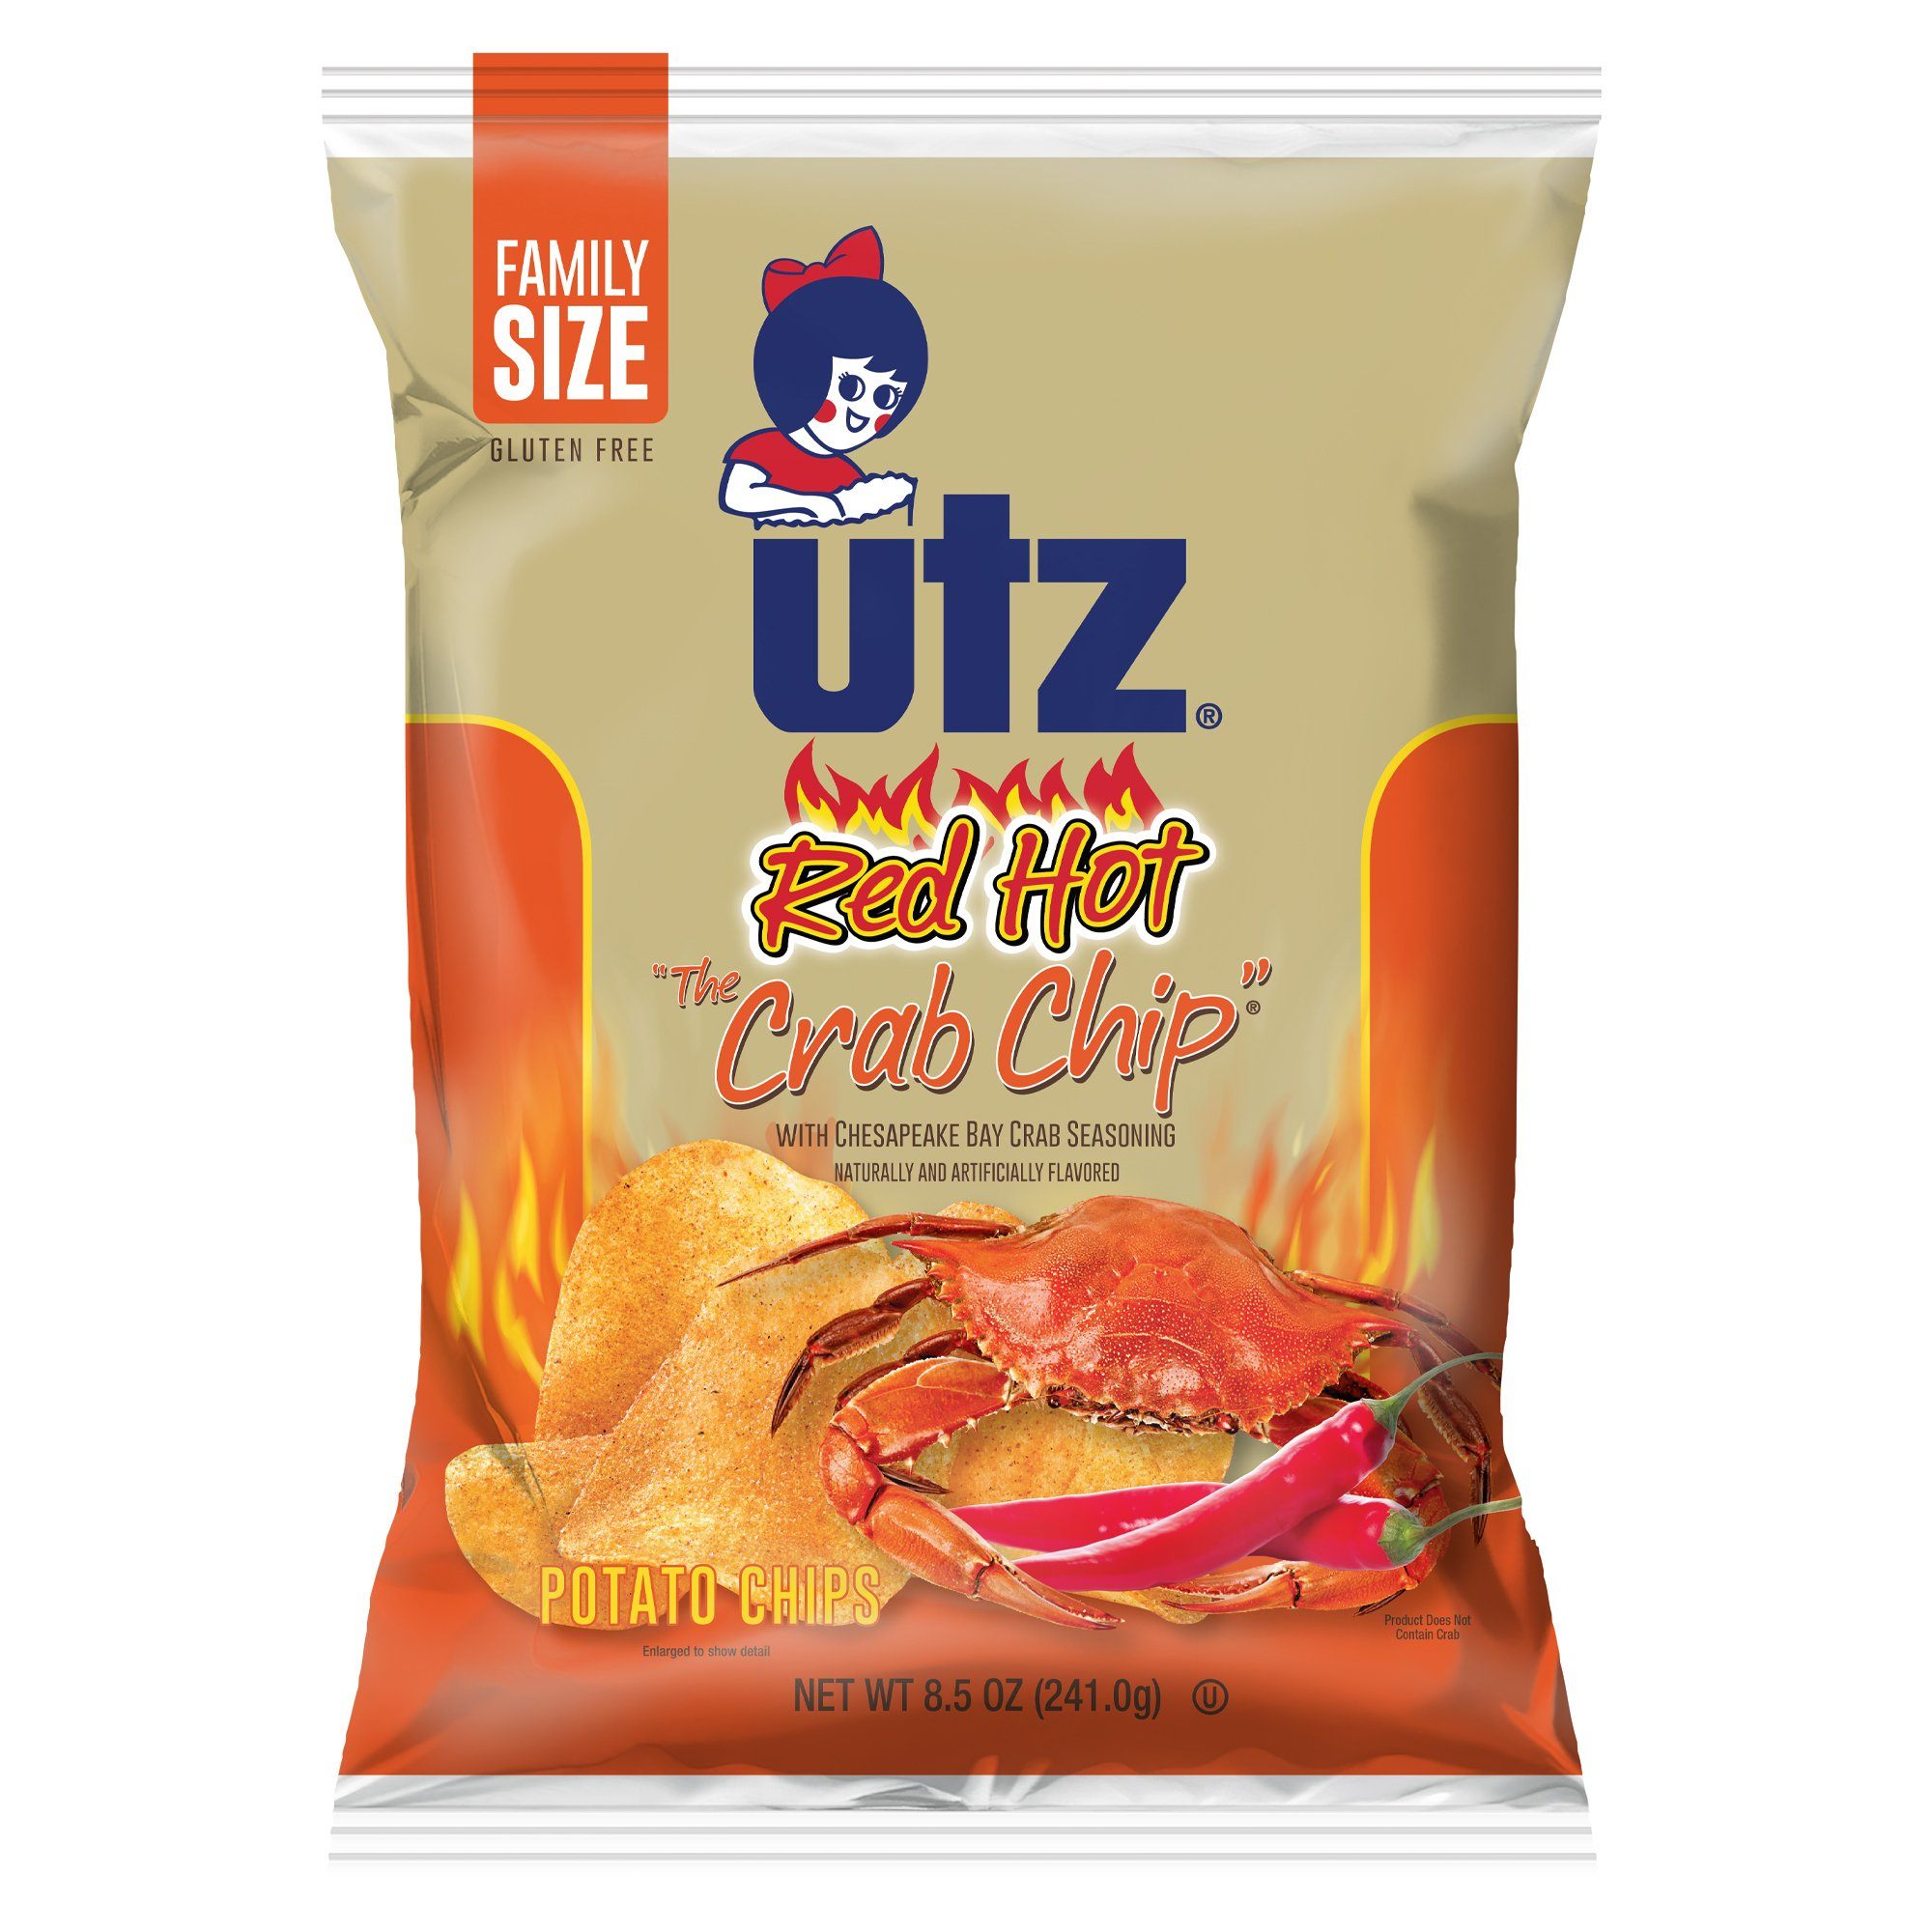 Utz Snacks Crab week Giveaway